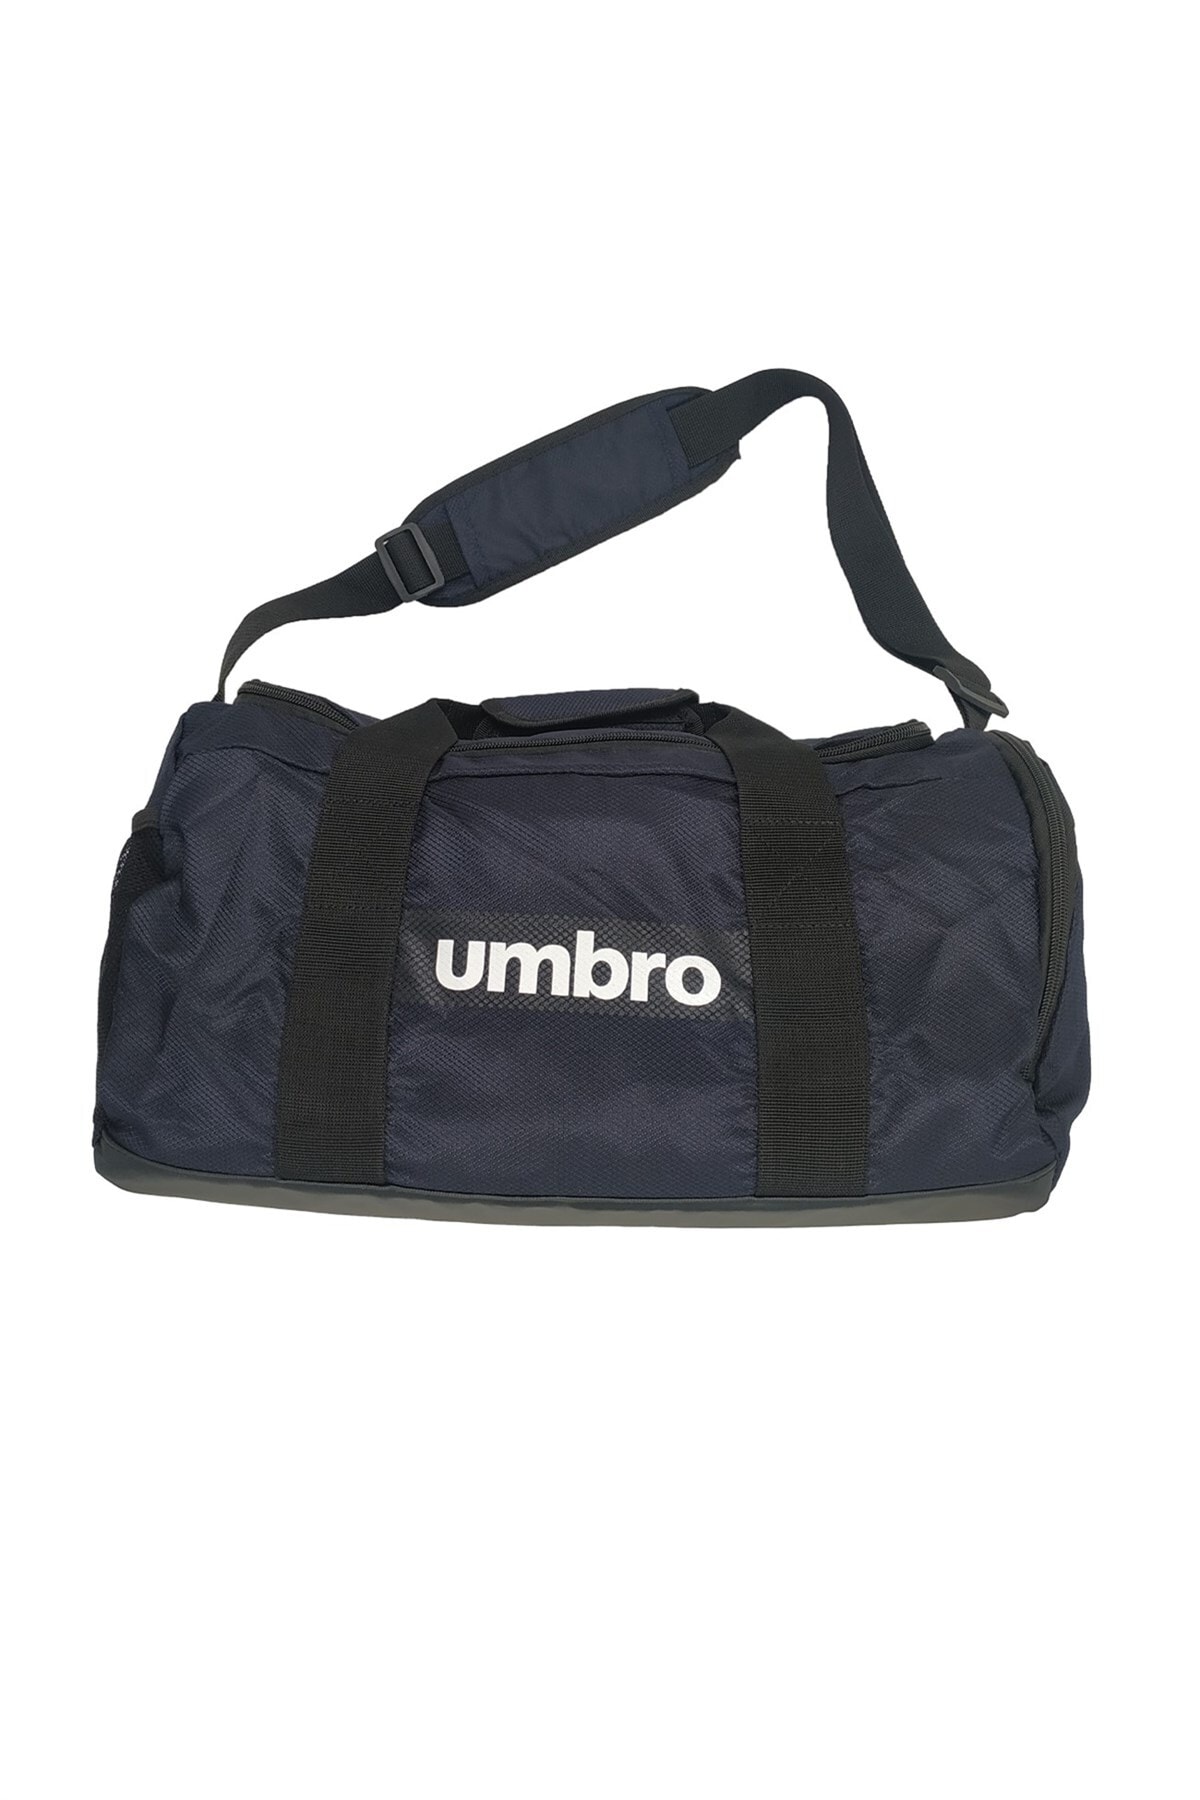 UMBRO Woo Sport Bag - Unisex Lacivert Spor Çanta - Tt-0036